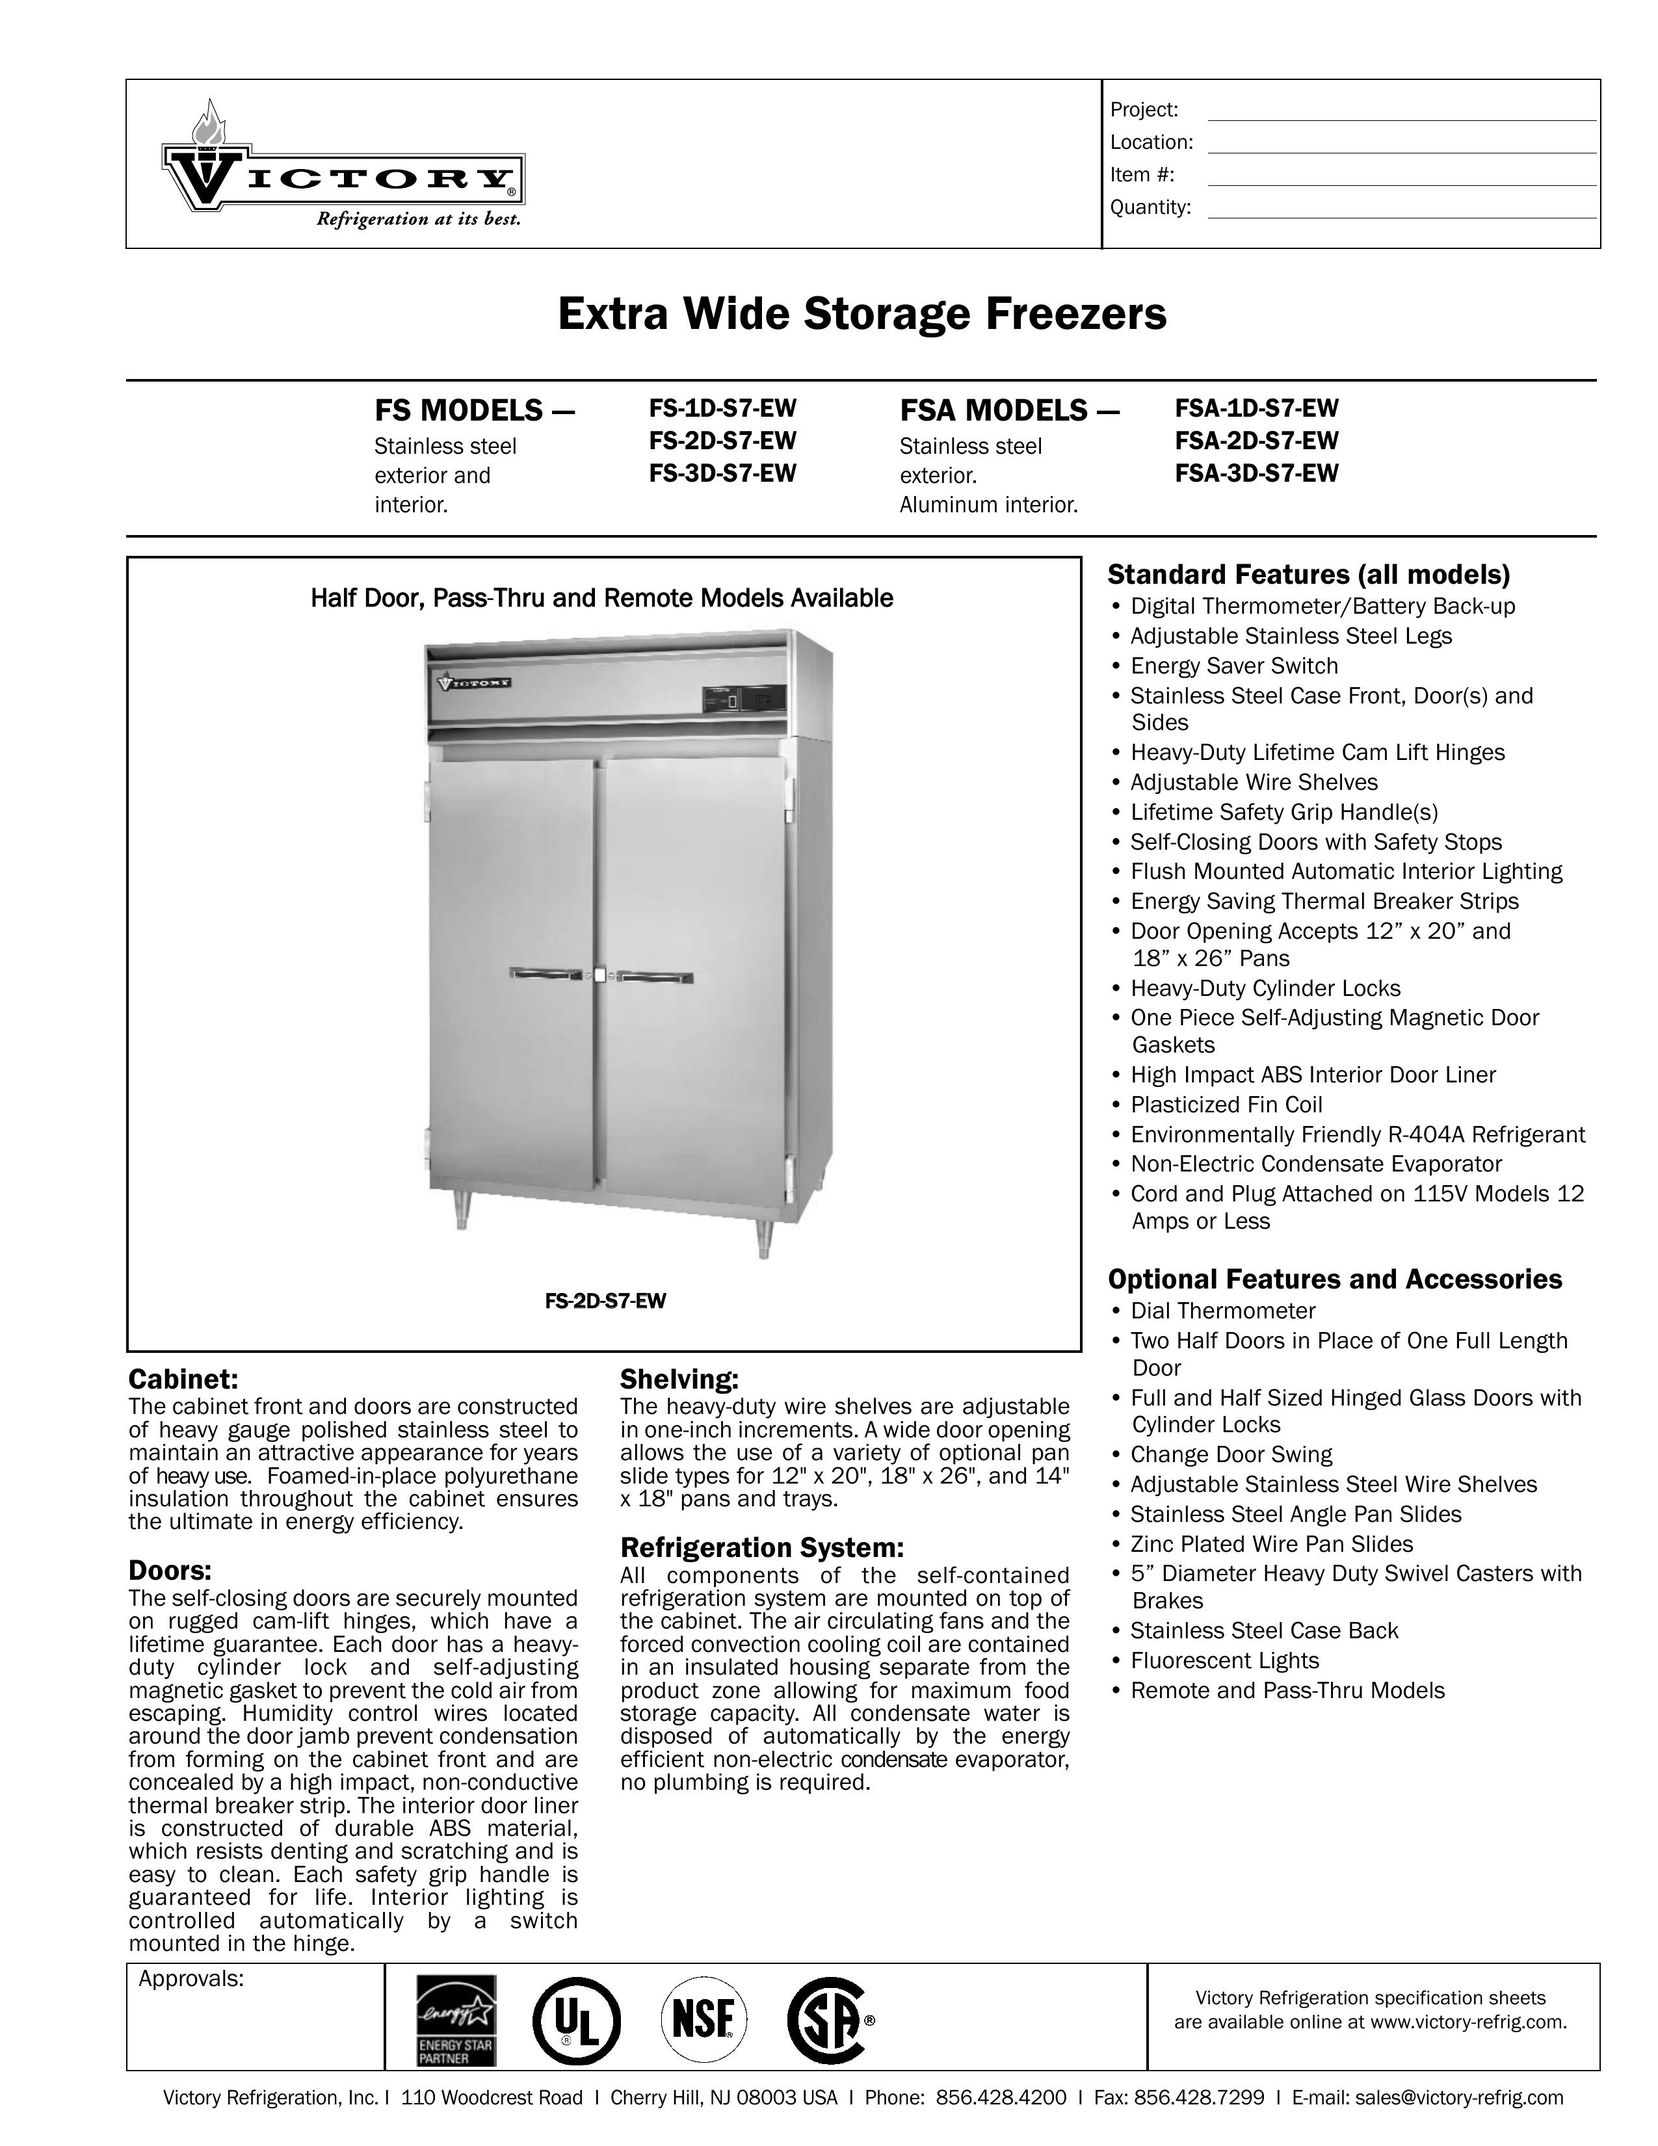 Victory Refrigeration FSA-3D-S7-EW Freezer User Manual